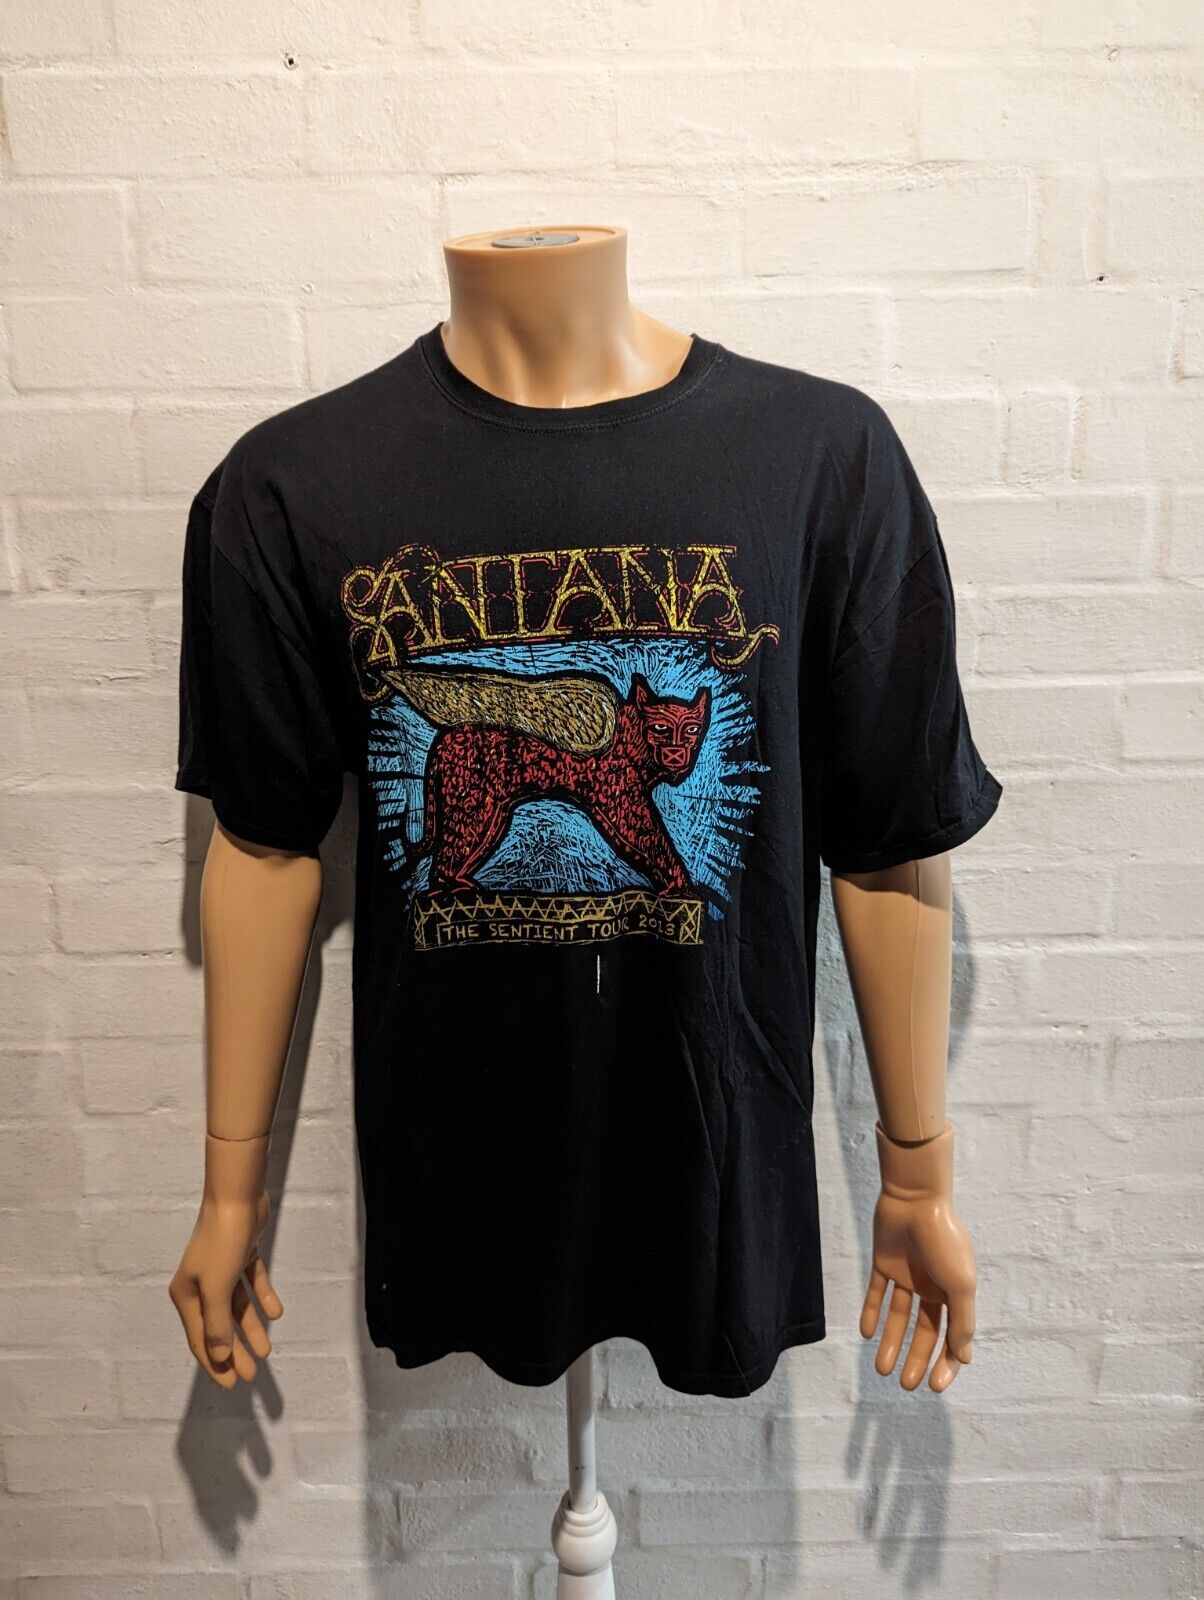 Santana Sentient Tour Vintage 2013 T-Shirt 2XL XXL Rock Band Tee